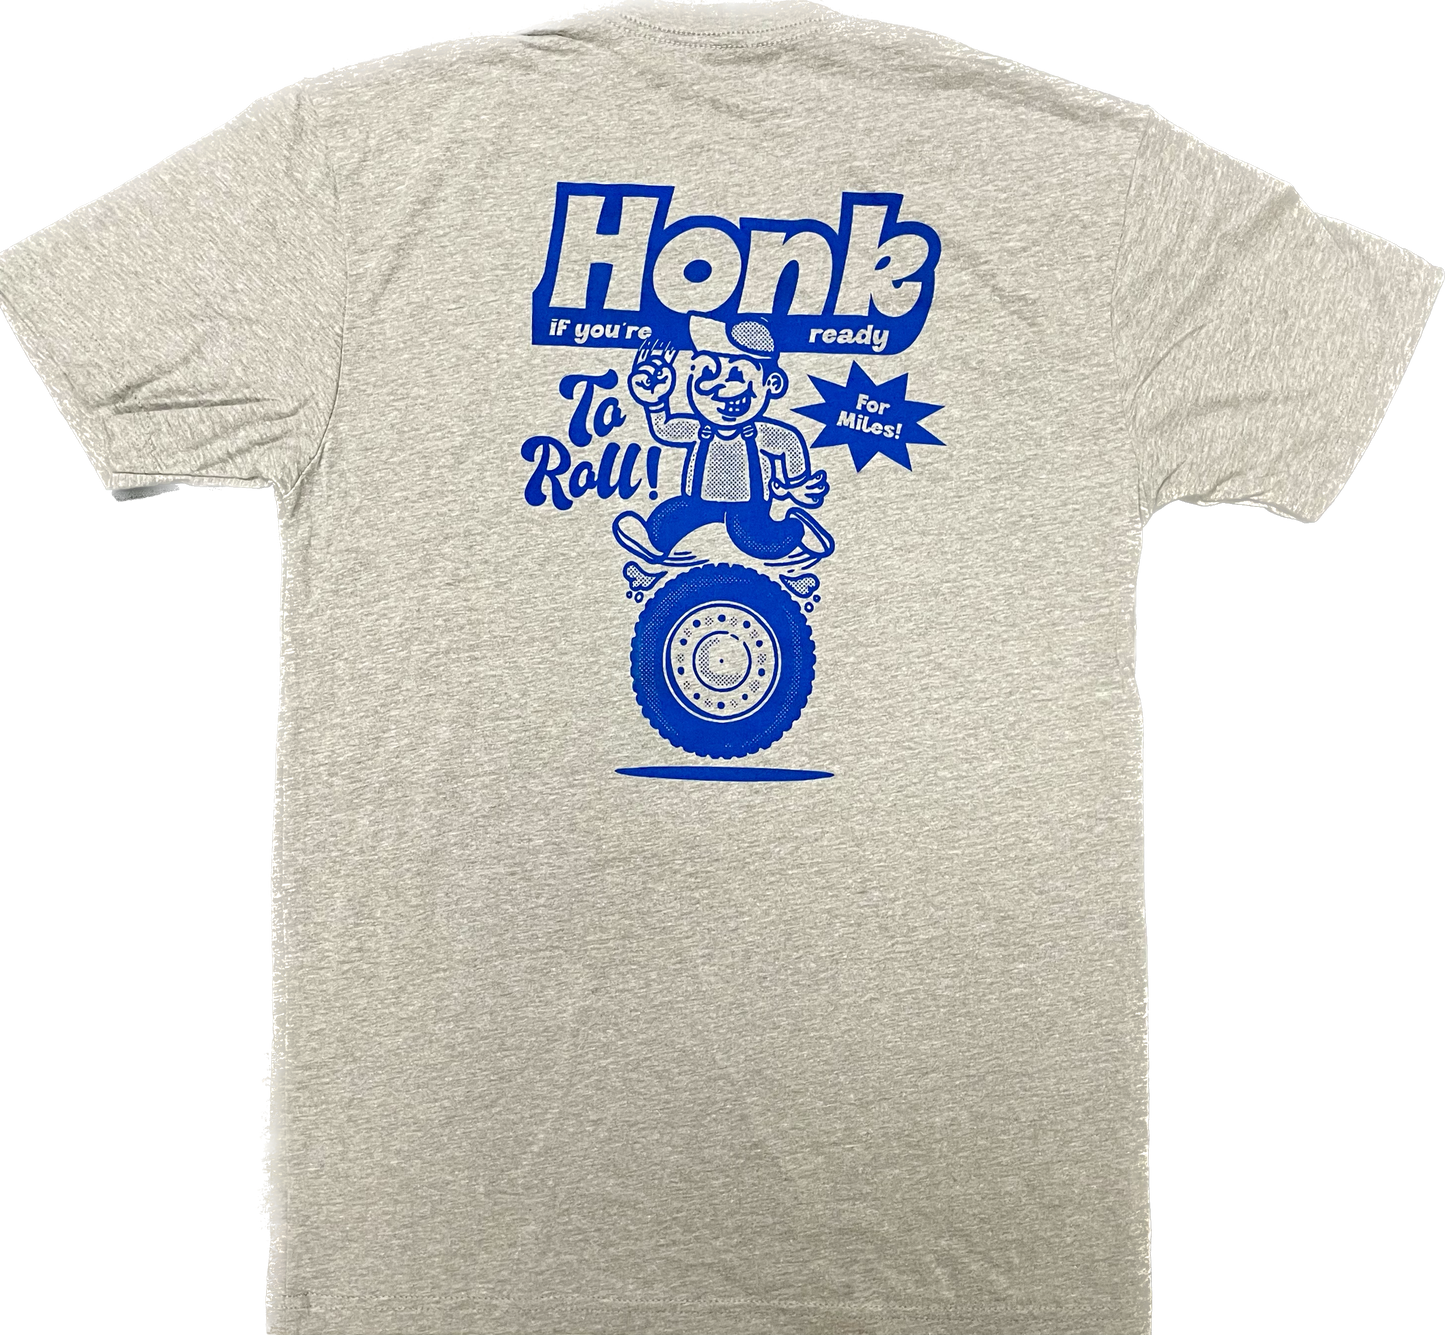 Higgy's- honk if you're ready t-shirt